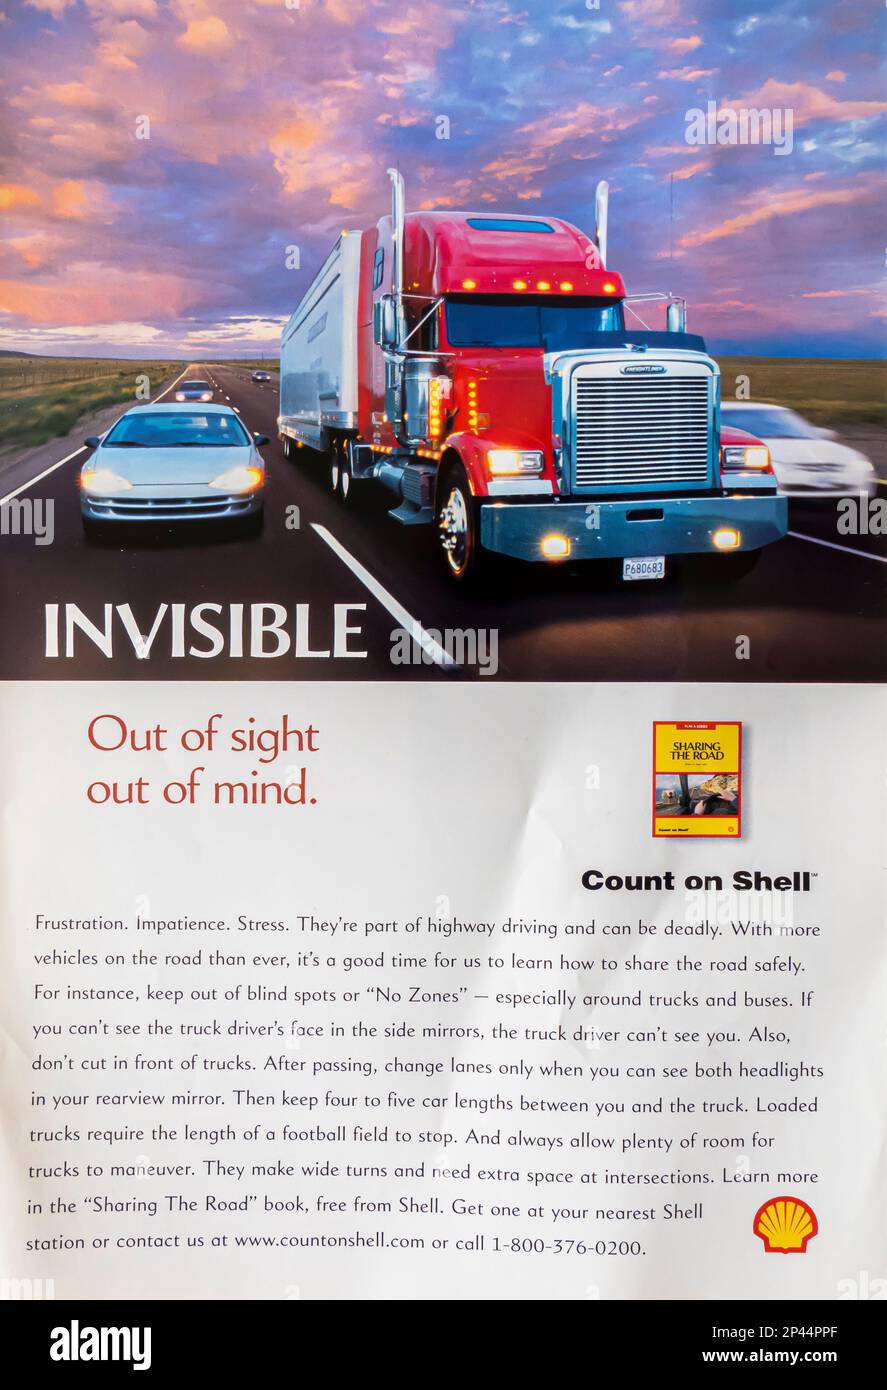 Shell advert in a Natgeo magazine May 2000 Stock Photo